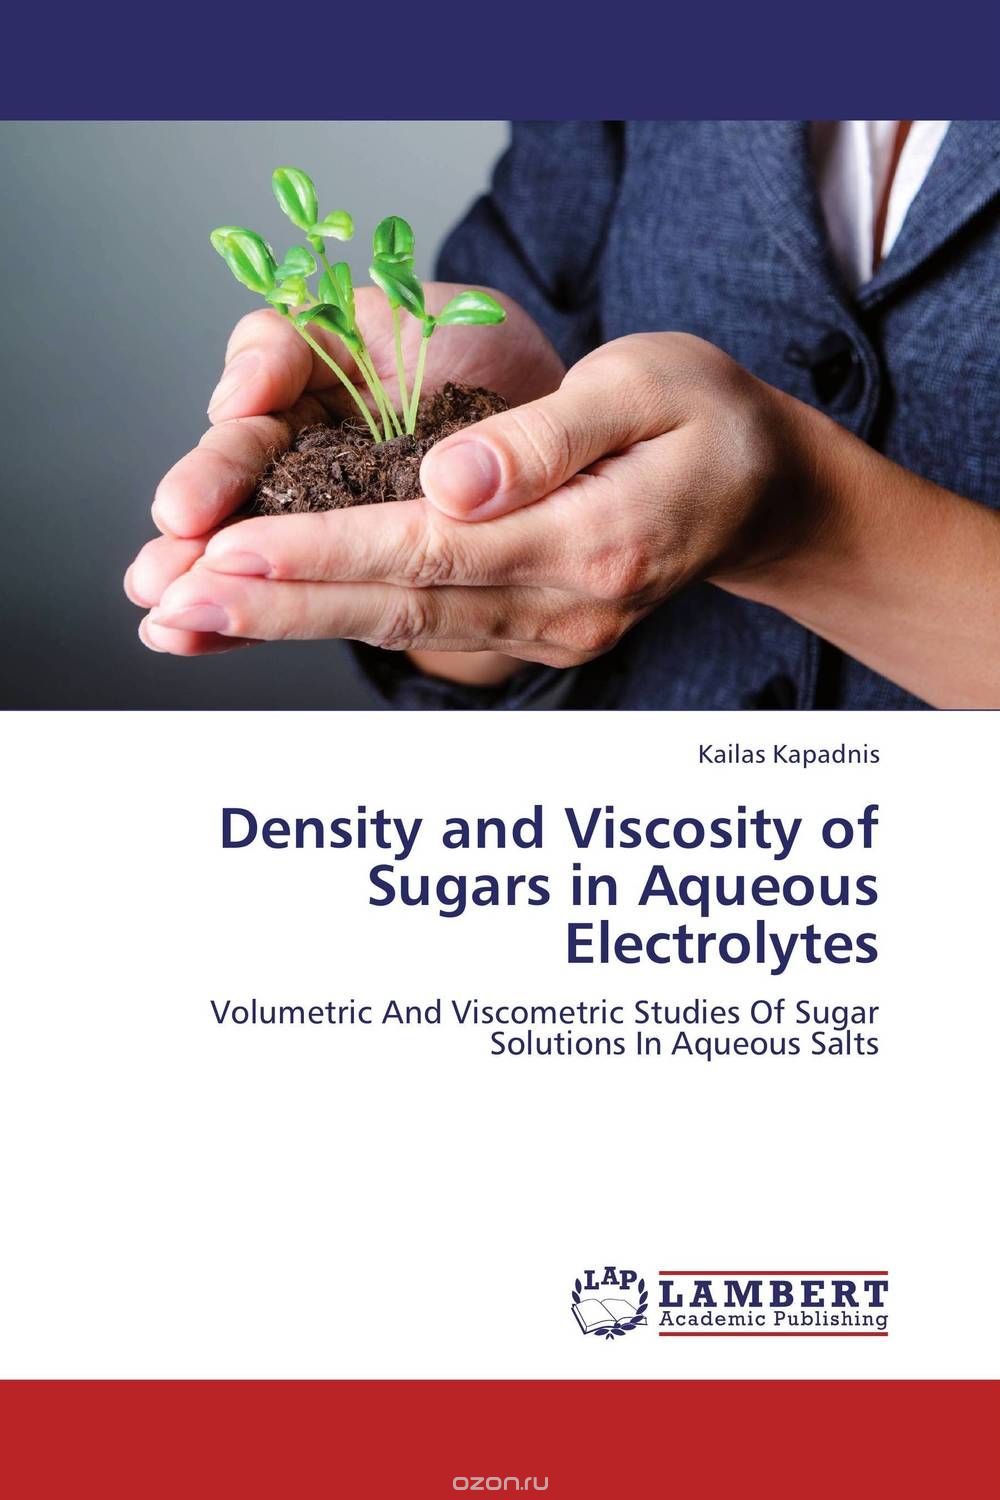 Скачать книгу "Density and Viscosity of Sugars in Aqueous Electrolytes"